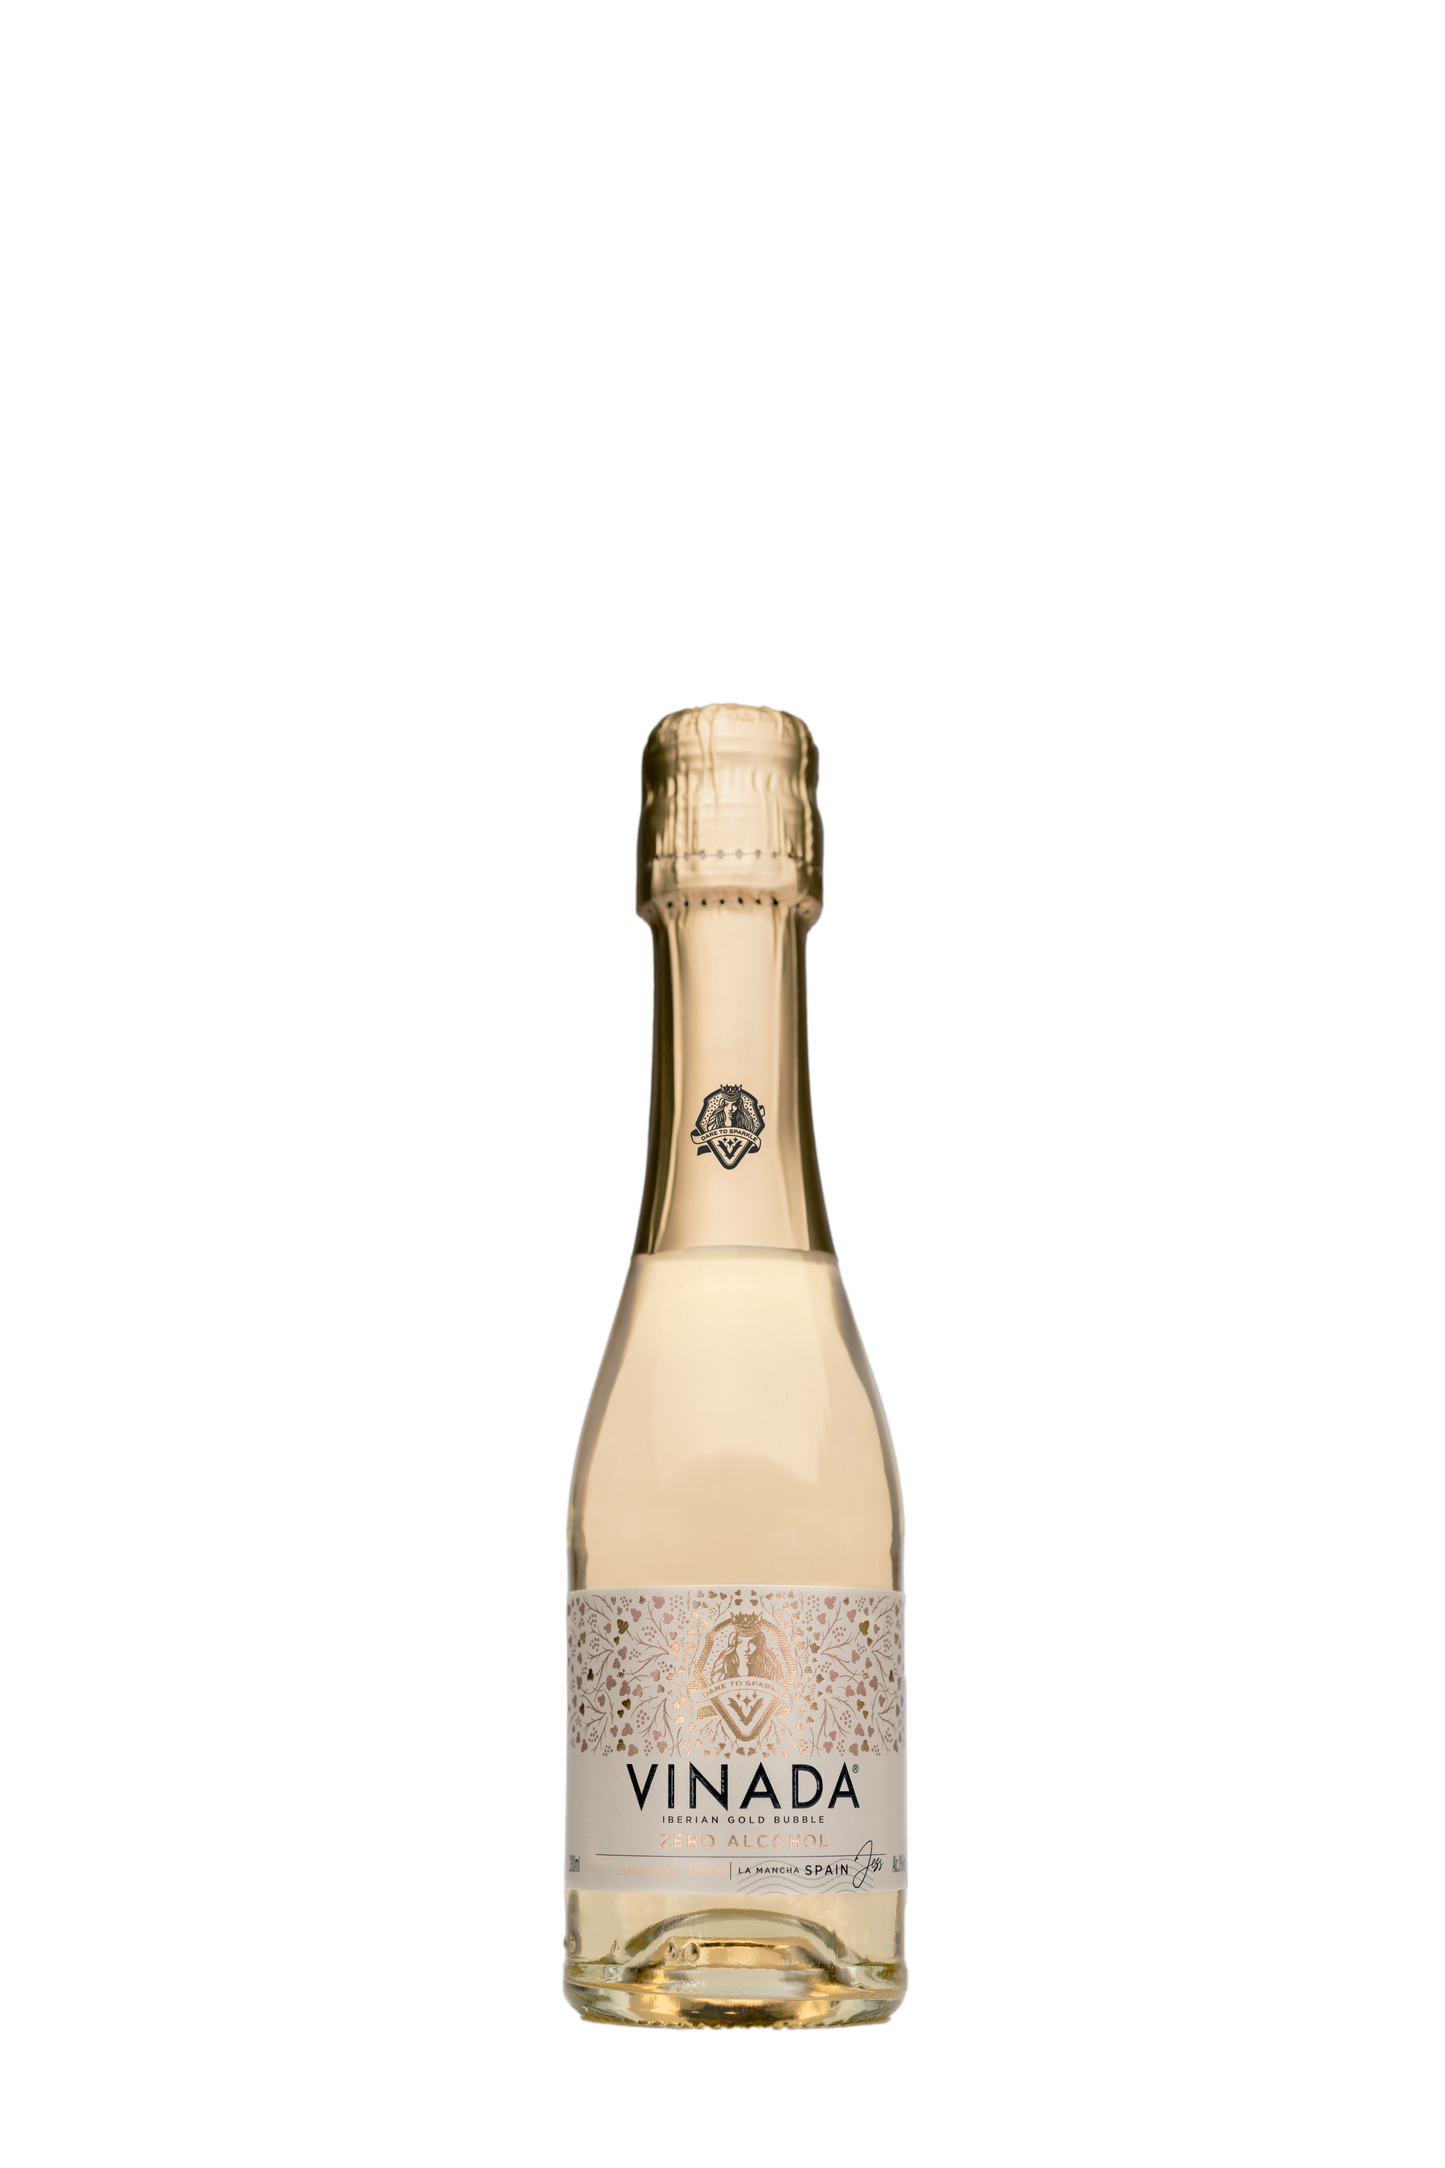 VINADA Amazing Airen Gold 200ml bottle